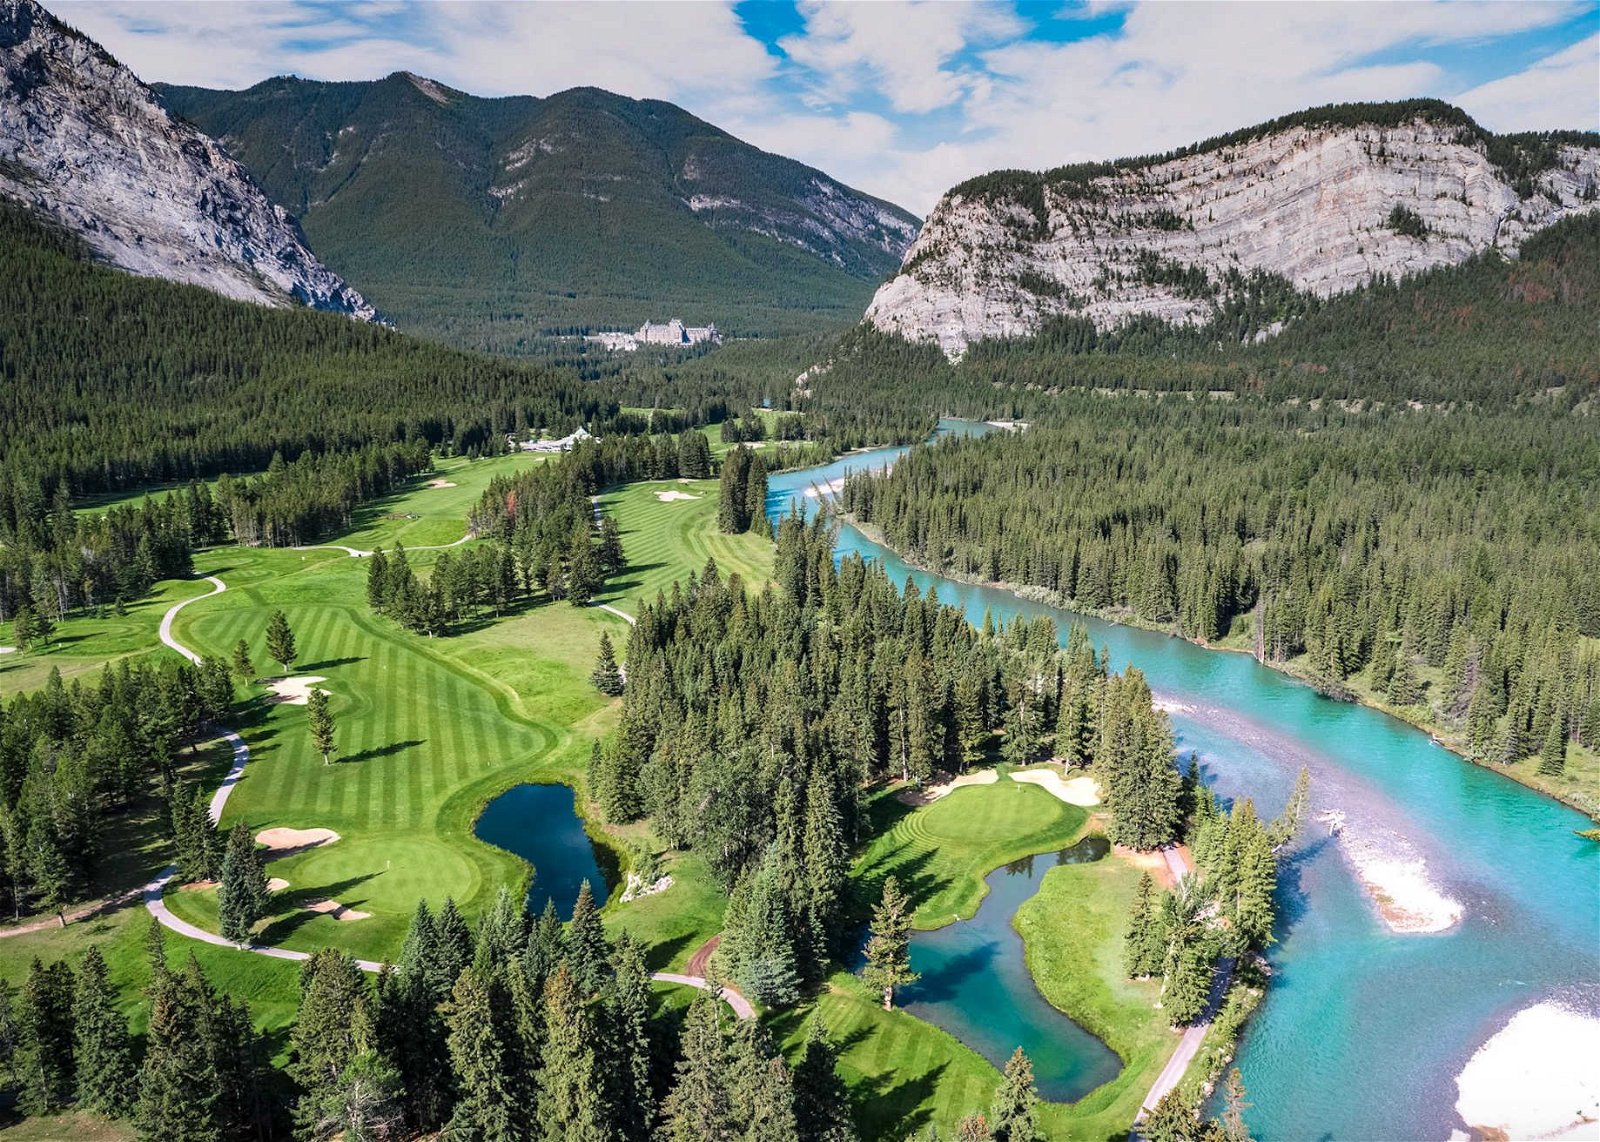 Banff Springs Golf Course parcours